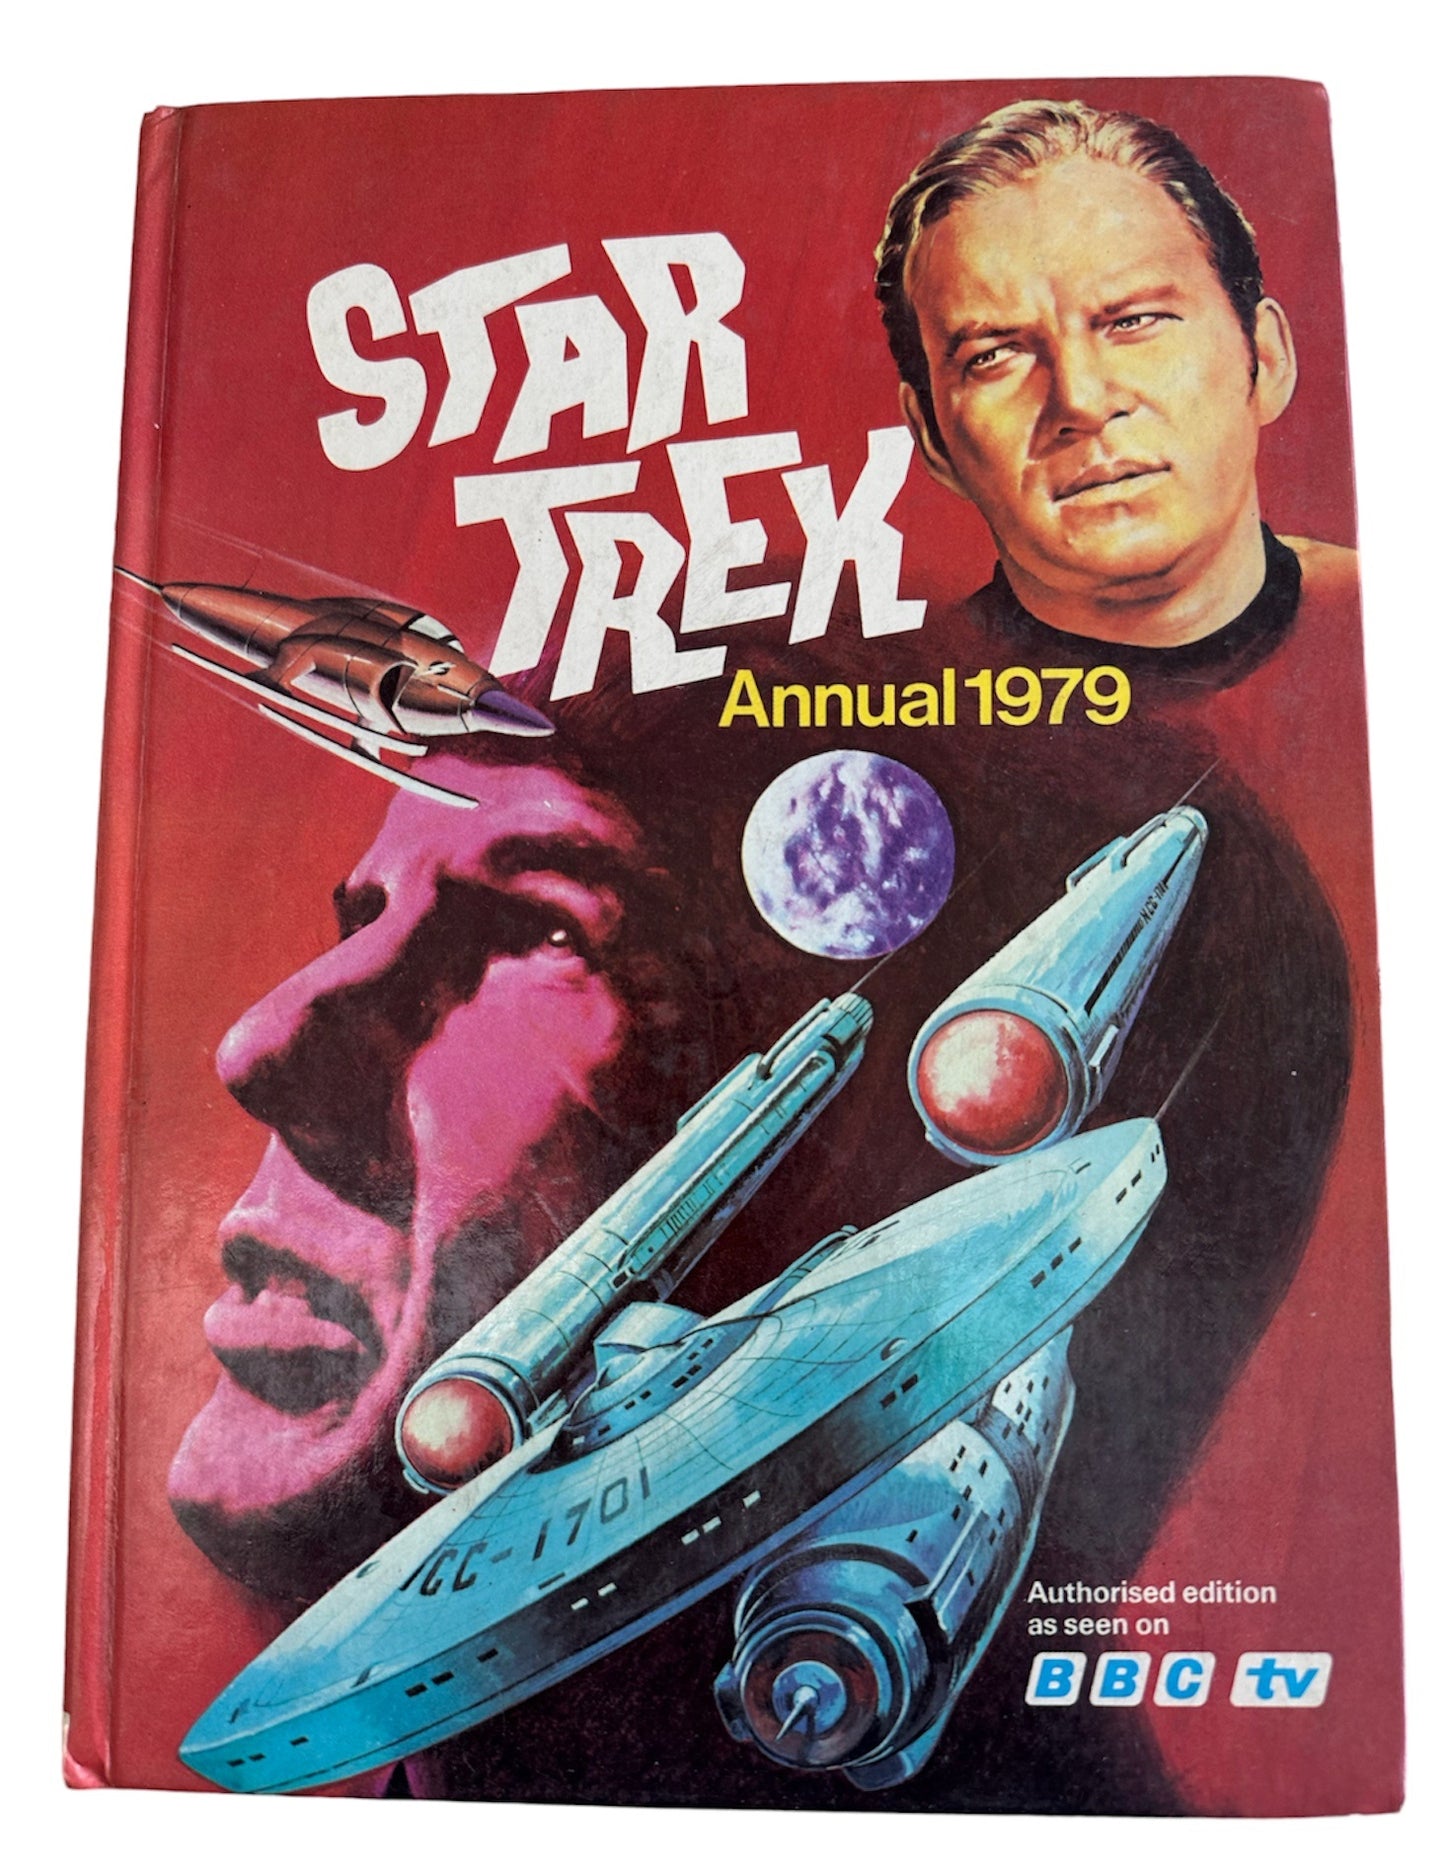 Vintage Star Trek Annual 1979 - Very Good Condition Hardback Book